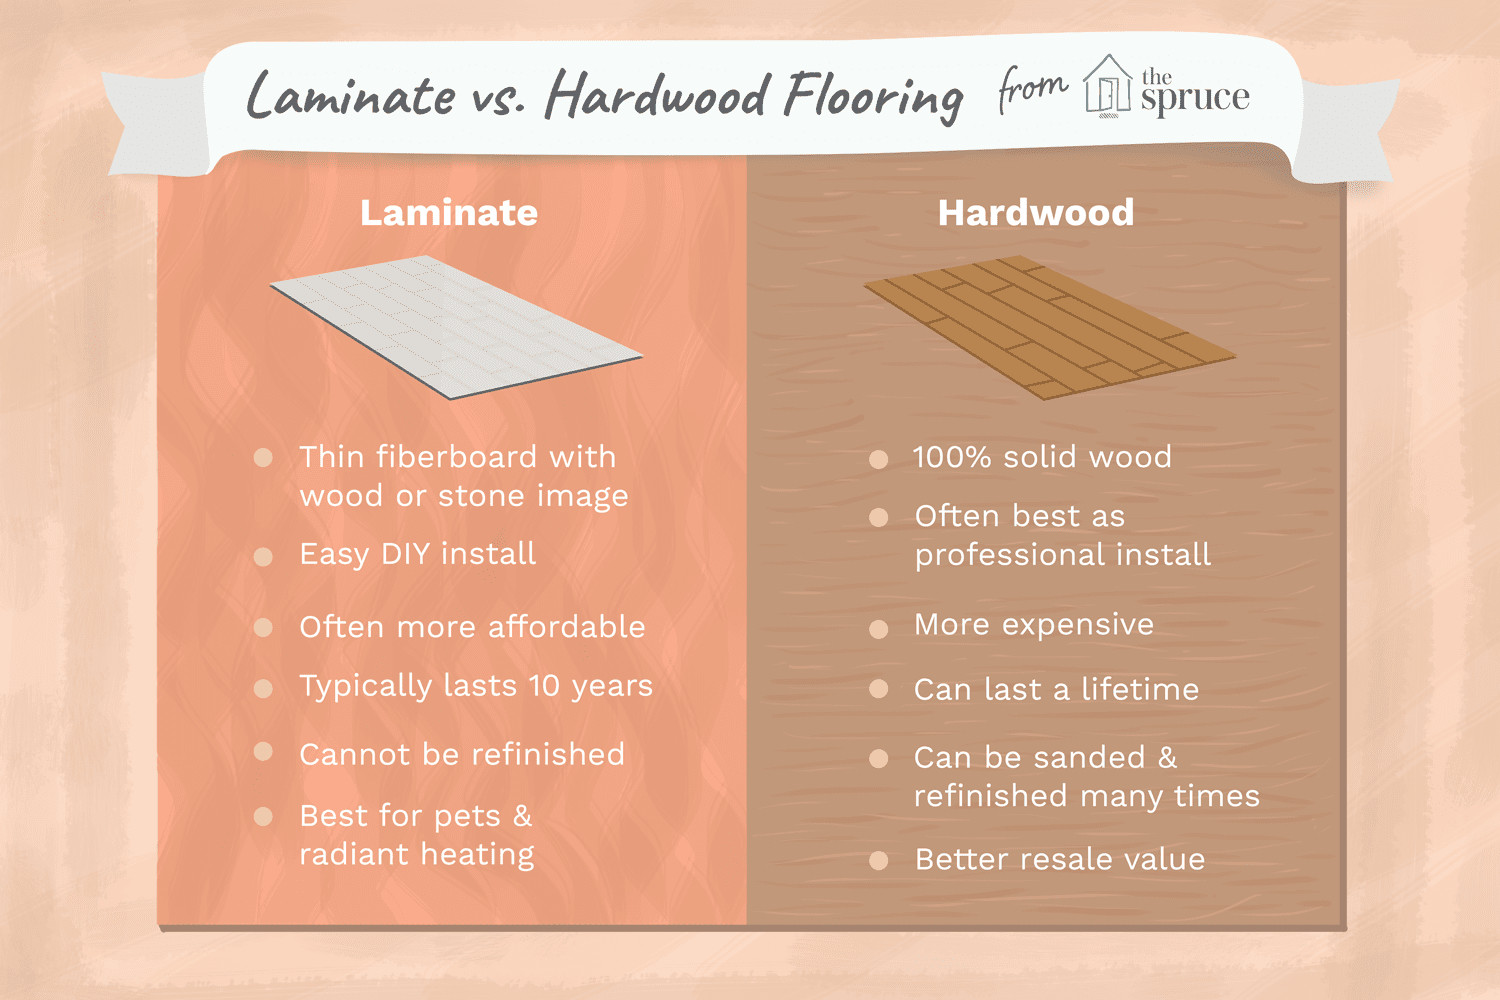 ash hardwood flooring reviews of laminate vs hardwood doesnt have to be a hard decision throughout hardwood doesnt have to be a hard decision